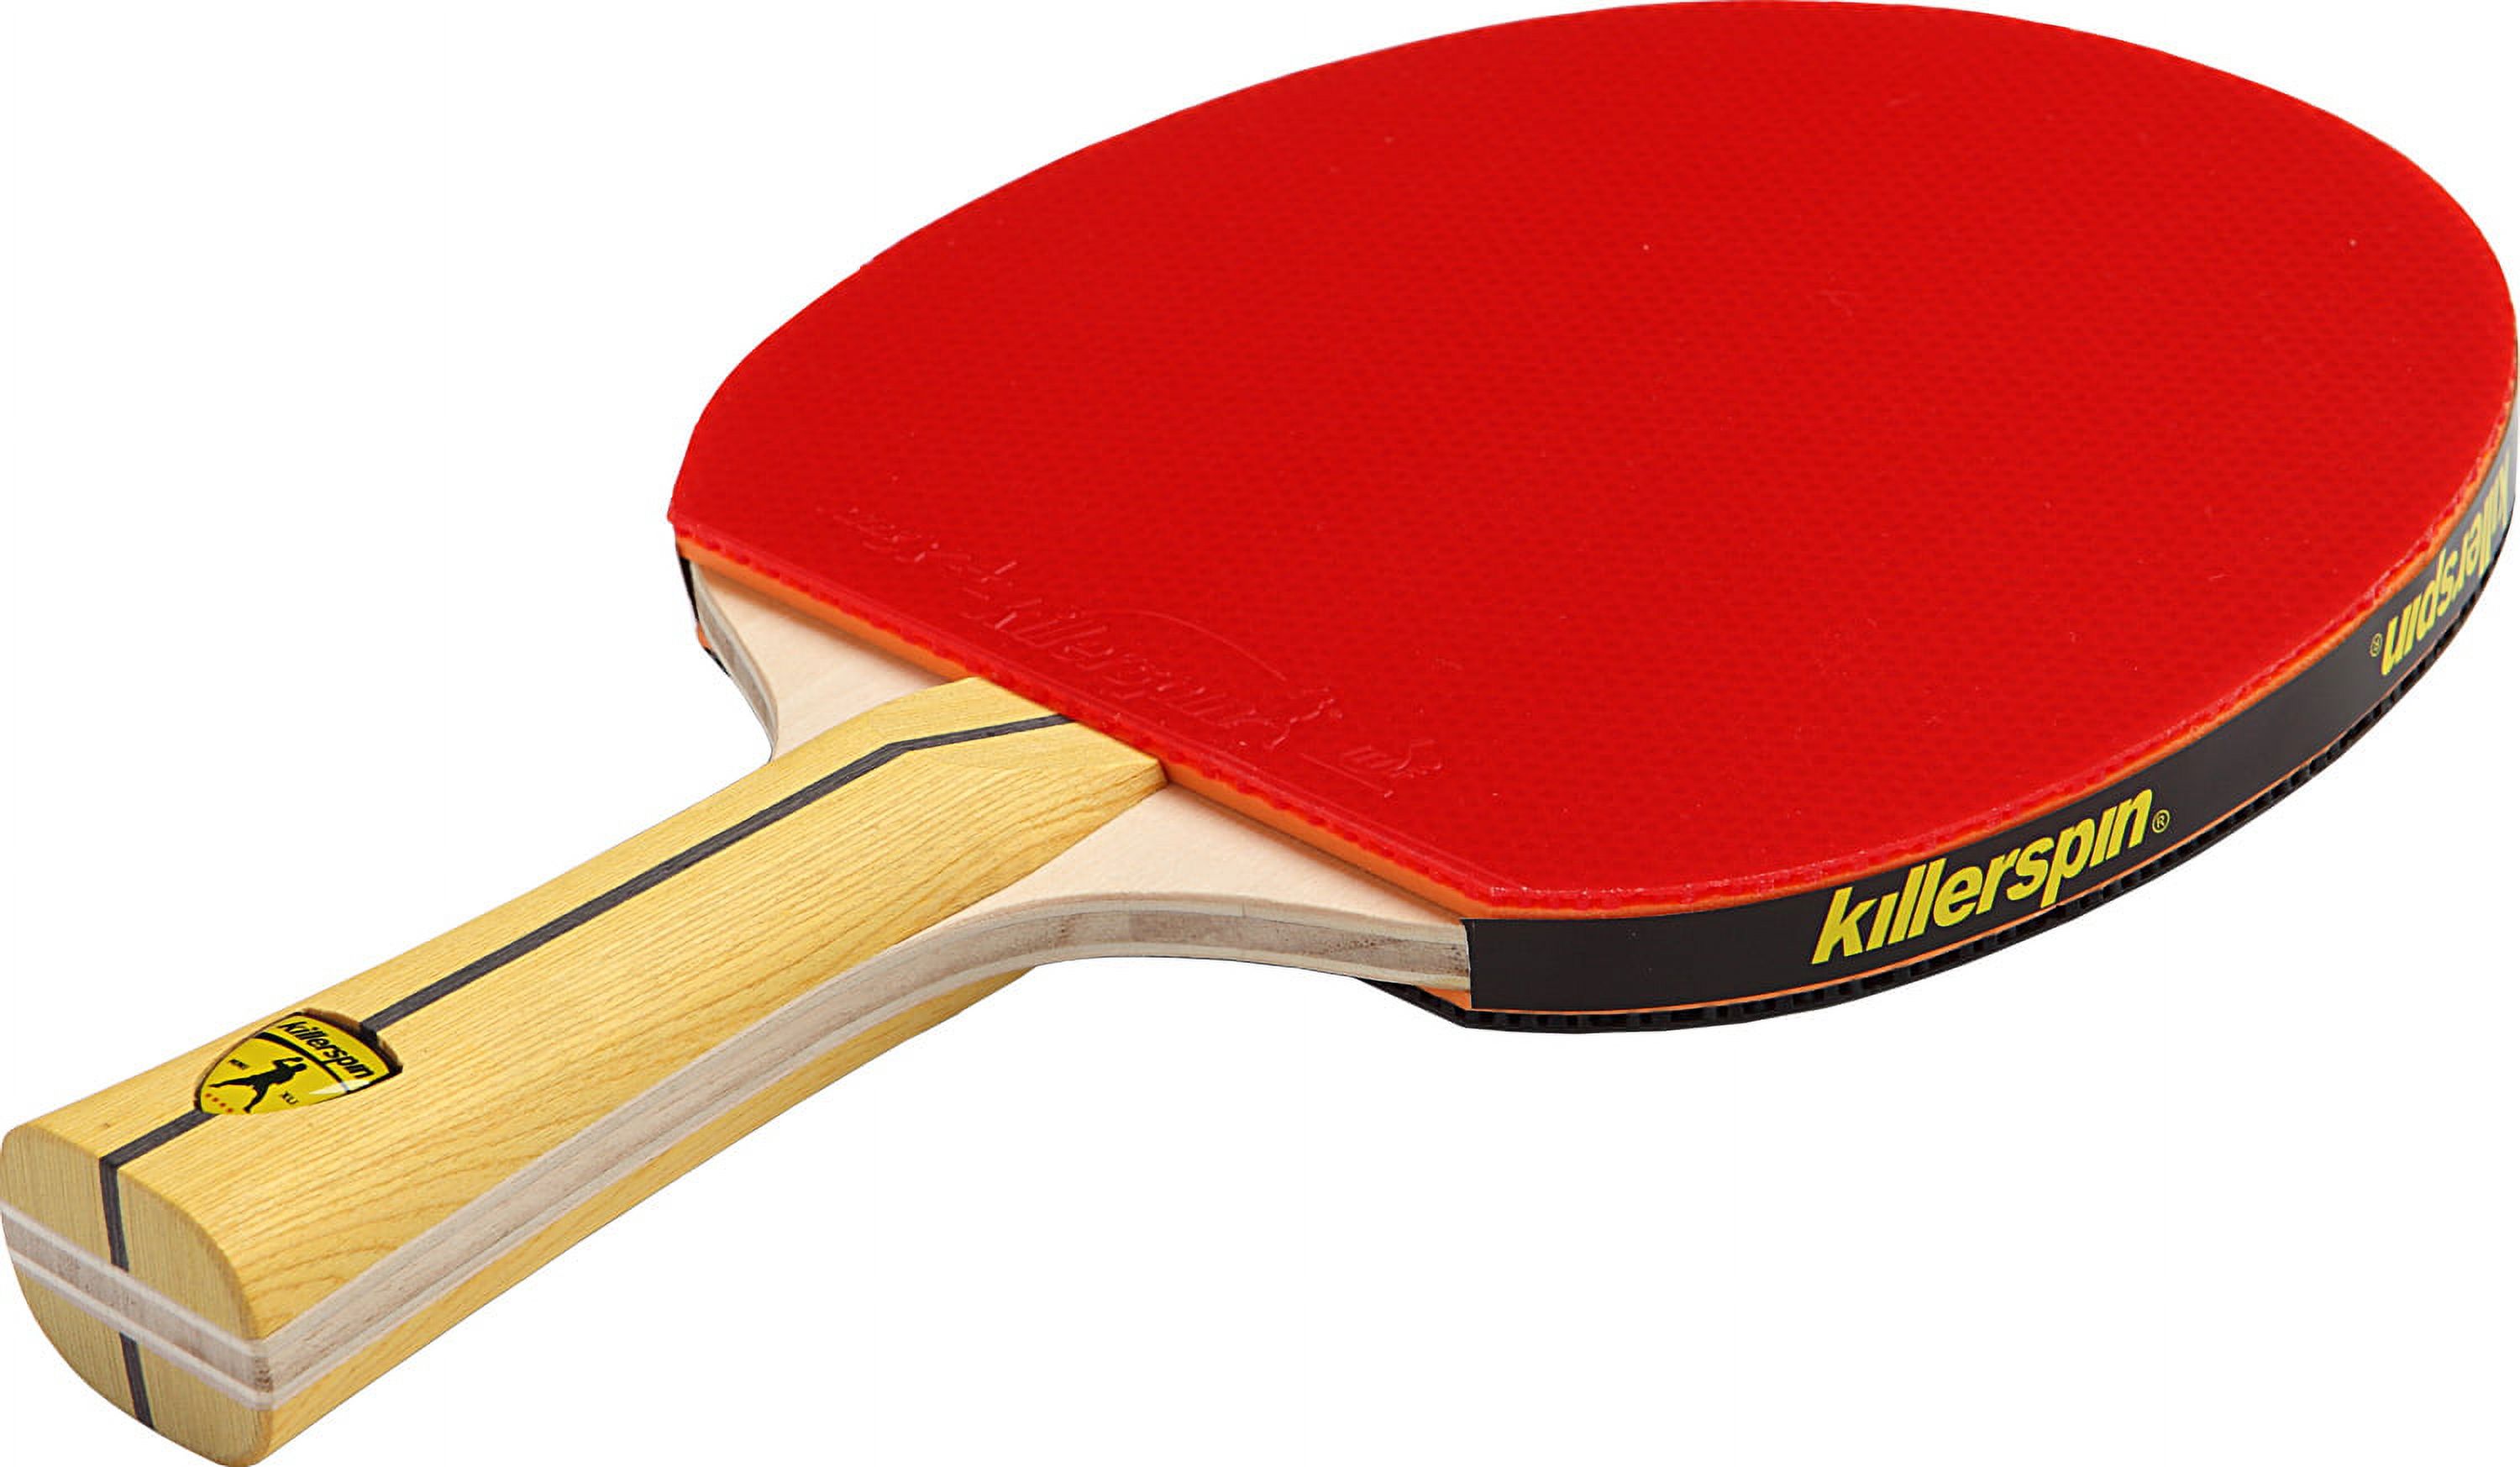 Killerspin JET400 Table Tennis Paddle, Ping Pong Racket - image 4 of 8